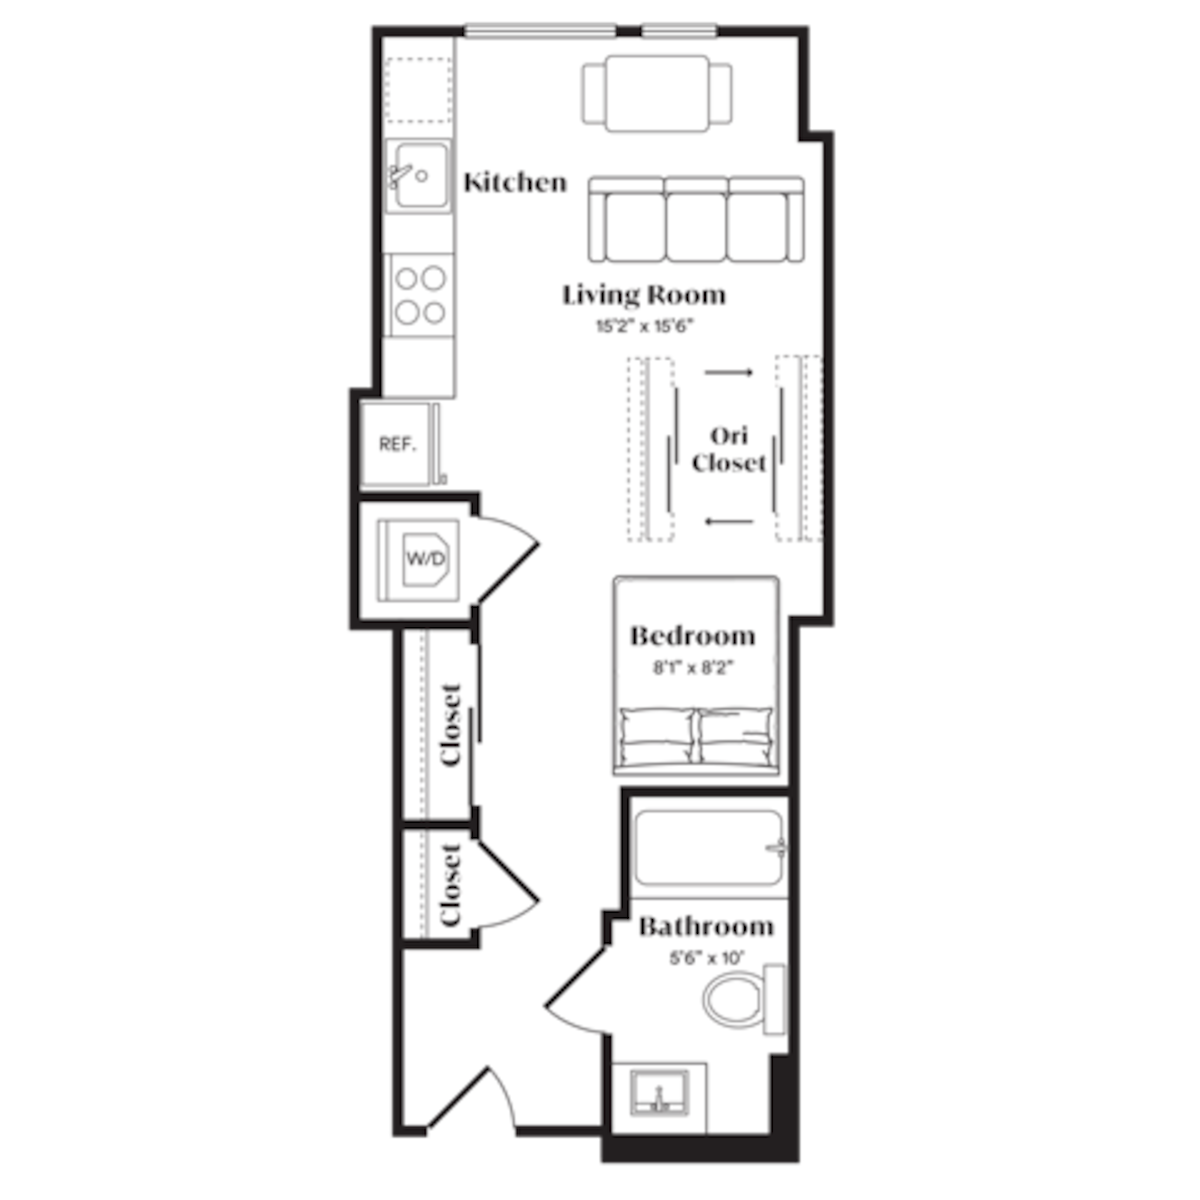 Floorplan diagram for S4A, showing Studio